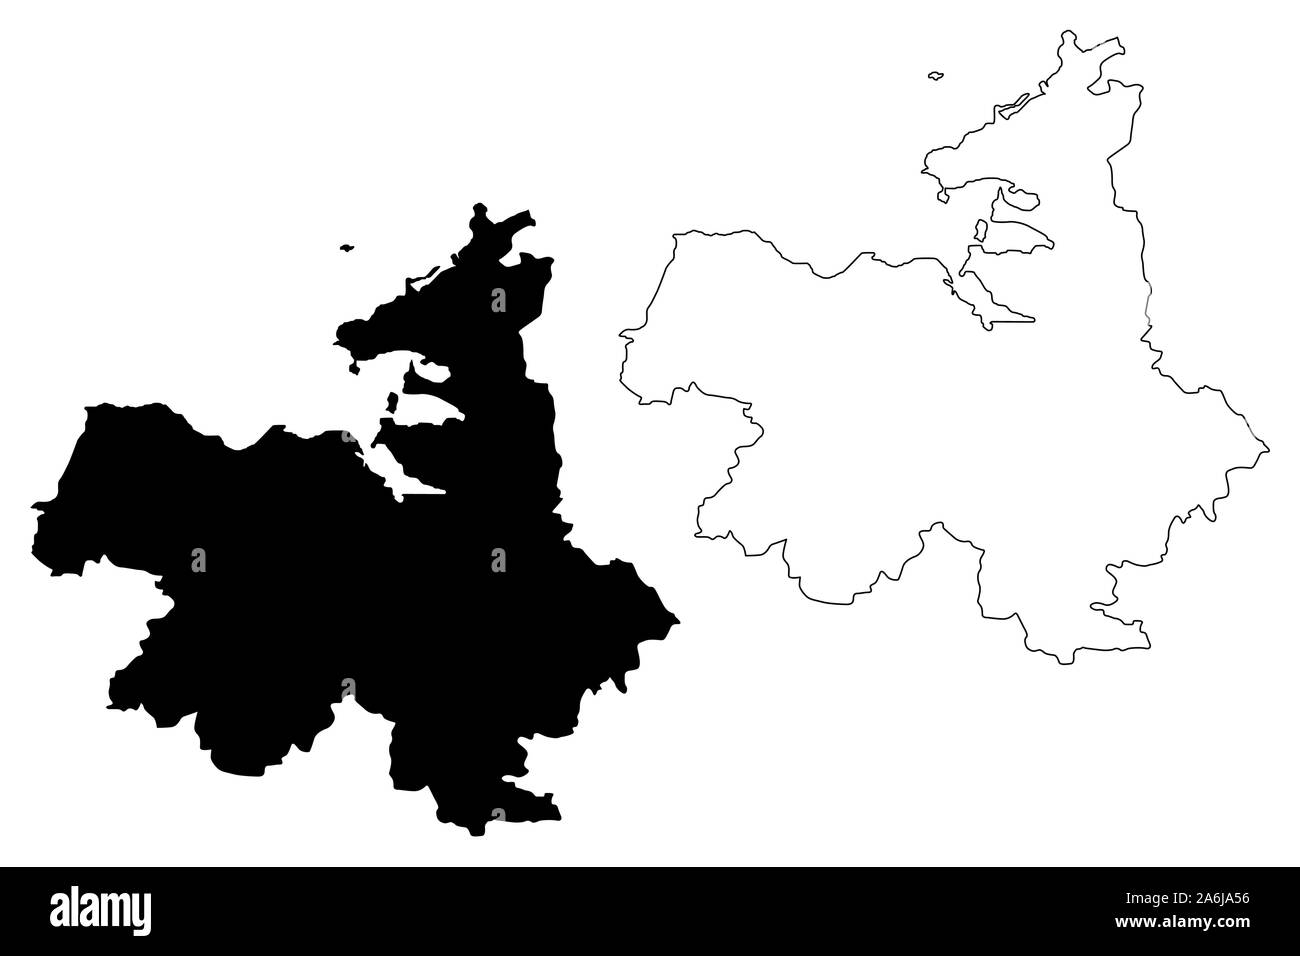 Sligo County Council (Irland, Grafschaften Irlands) Karte Vektor-illustration, kritzeln Skizze, Sligo Karte anzeigen Stock Vektor